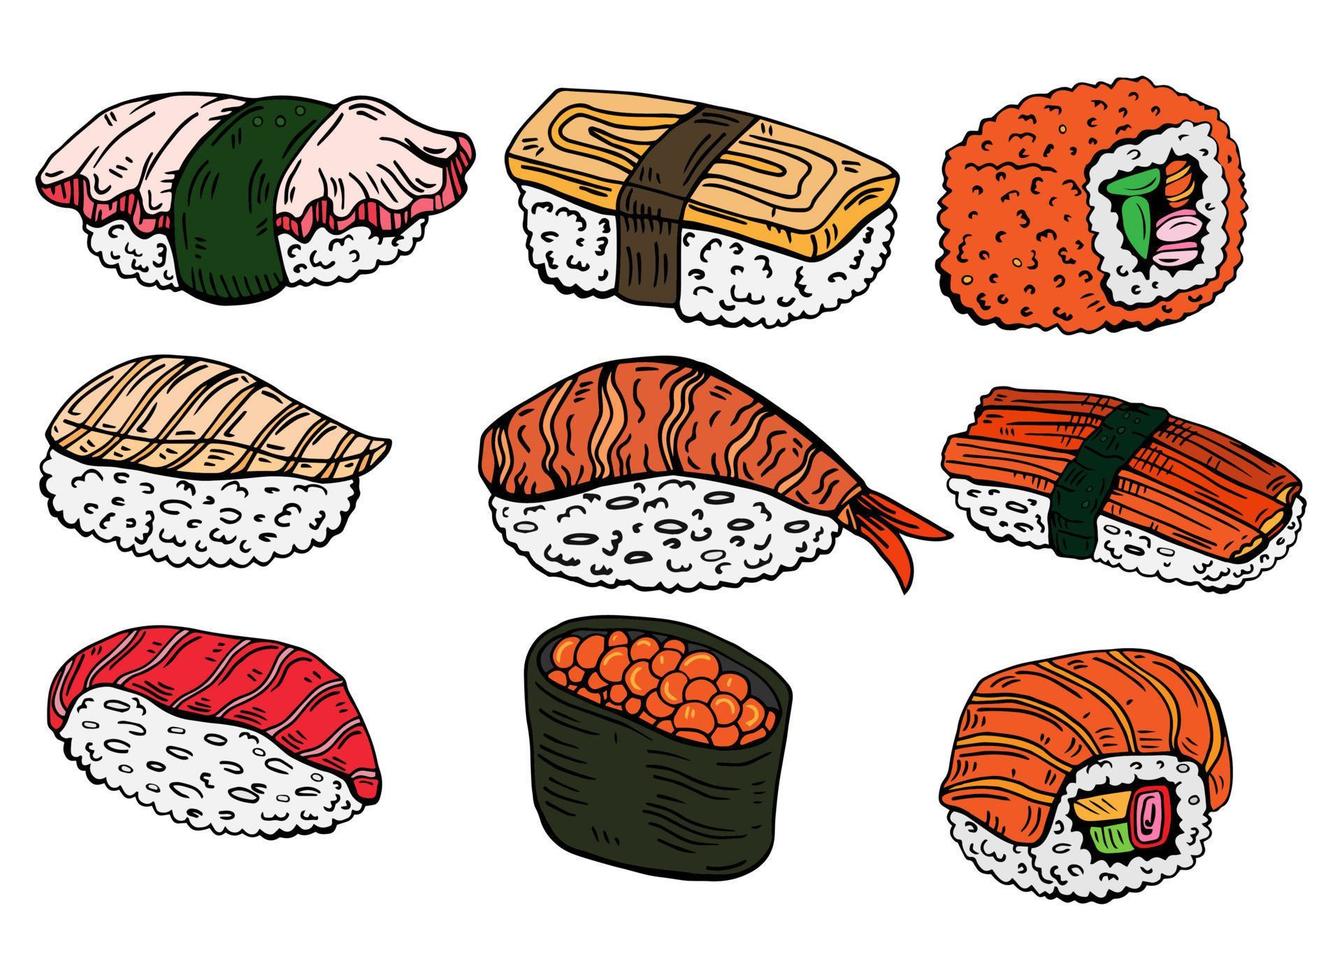 Sushi and rolls set. Japanese traditional cuisine dishes - nigiri